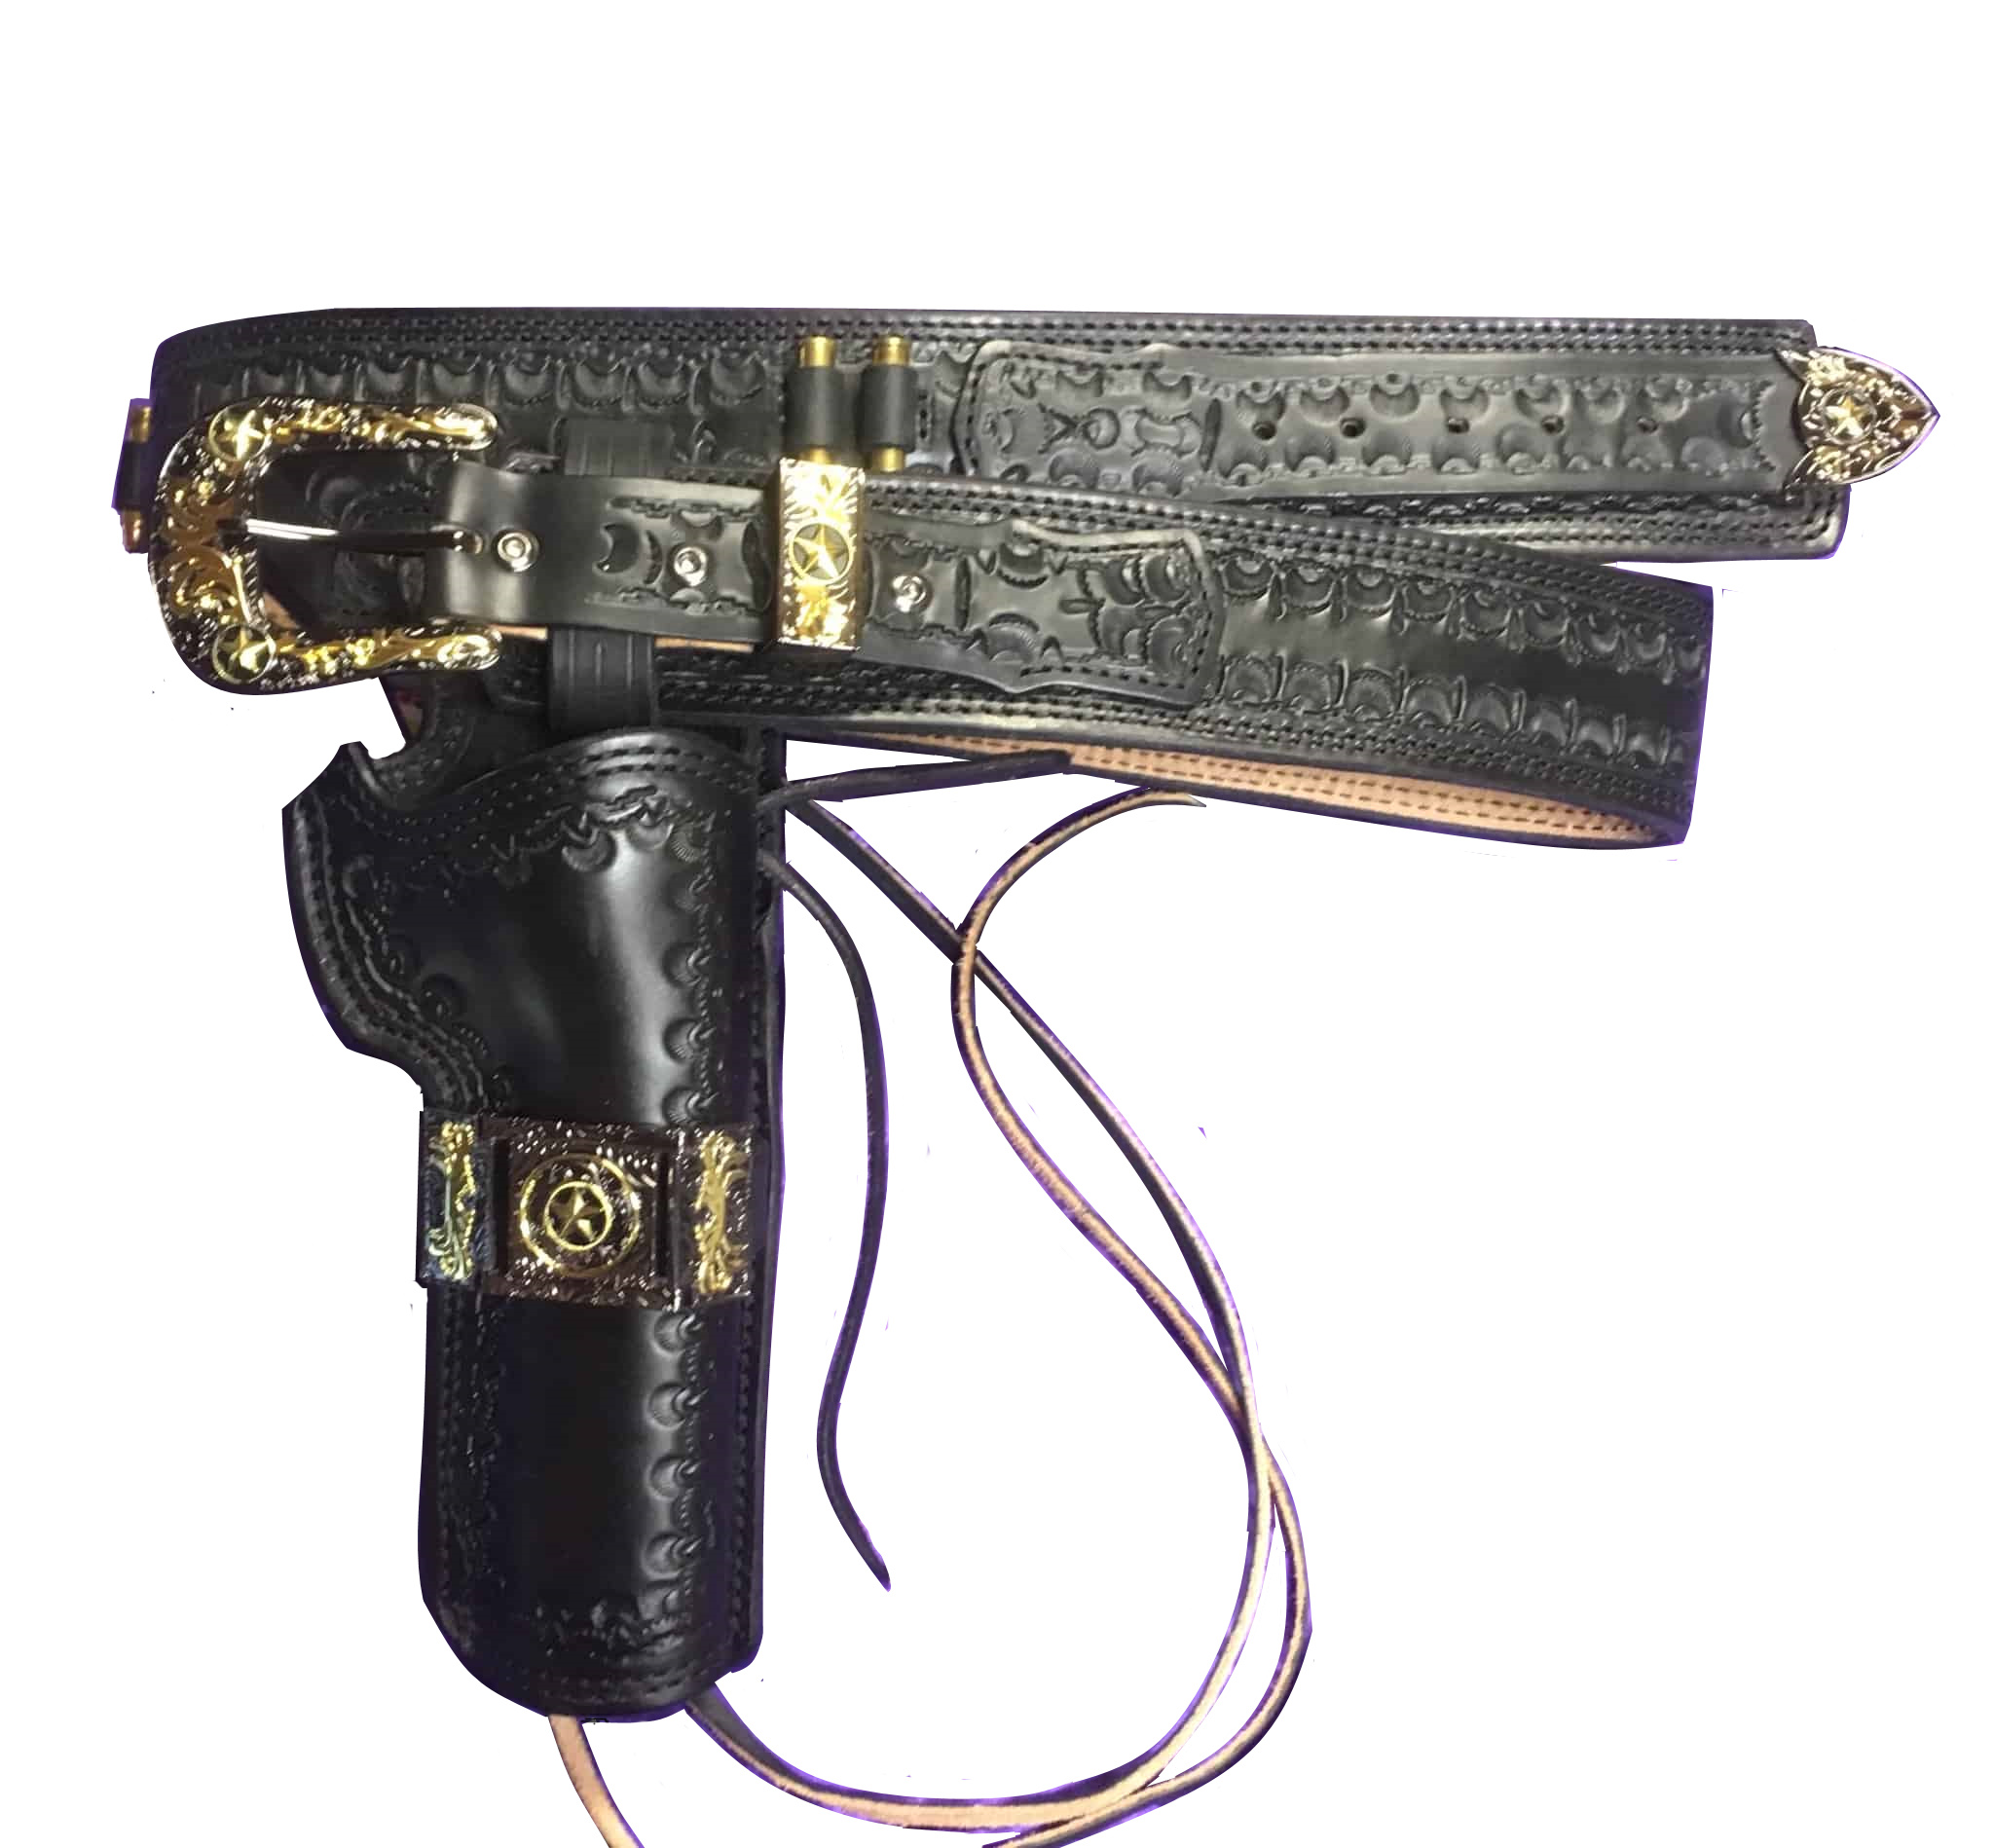 1952 Lone Star Cartridge Gun Belt and Fast Draw Holster(s)